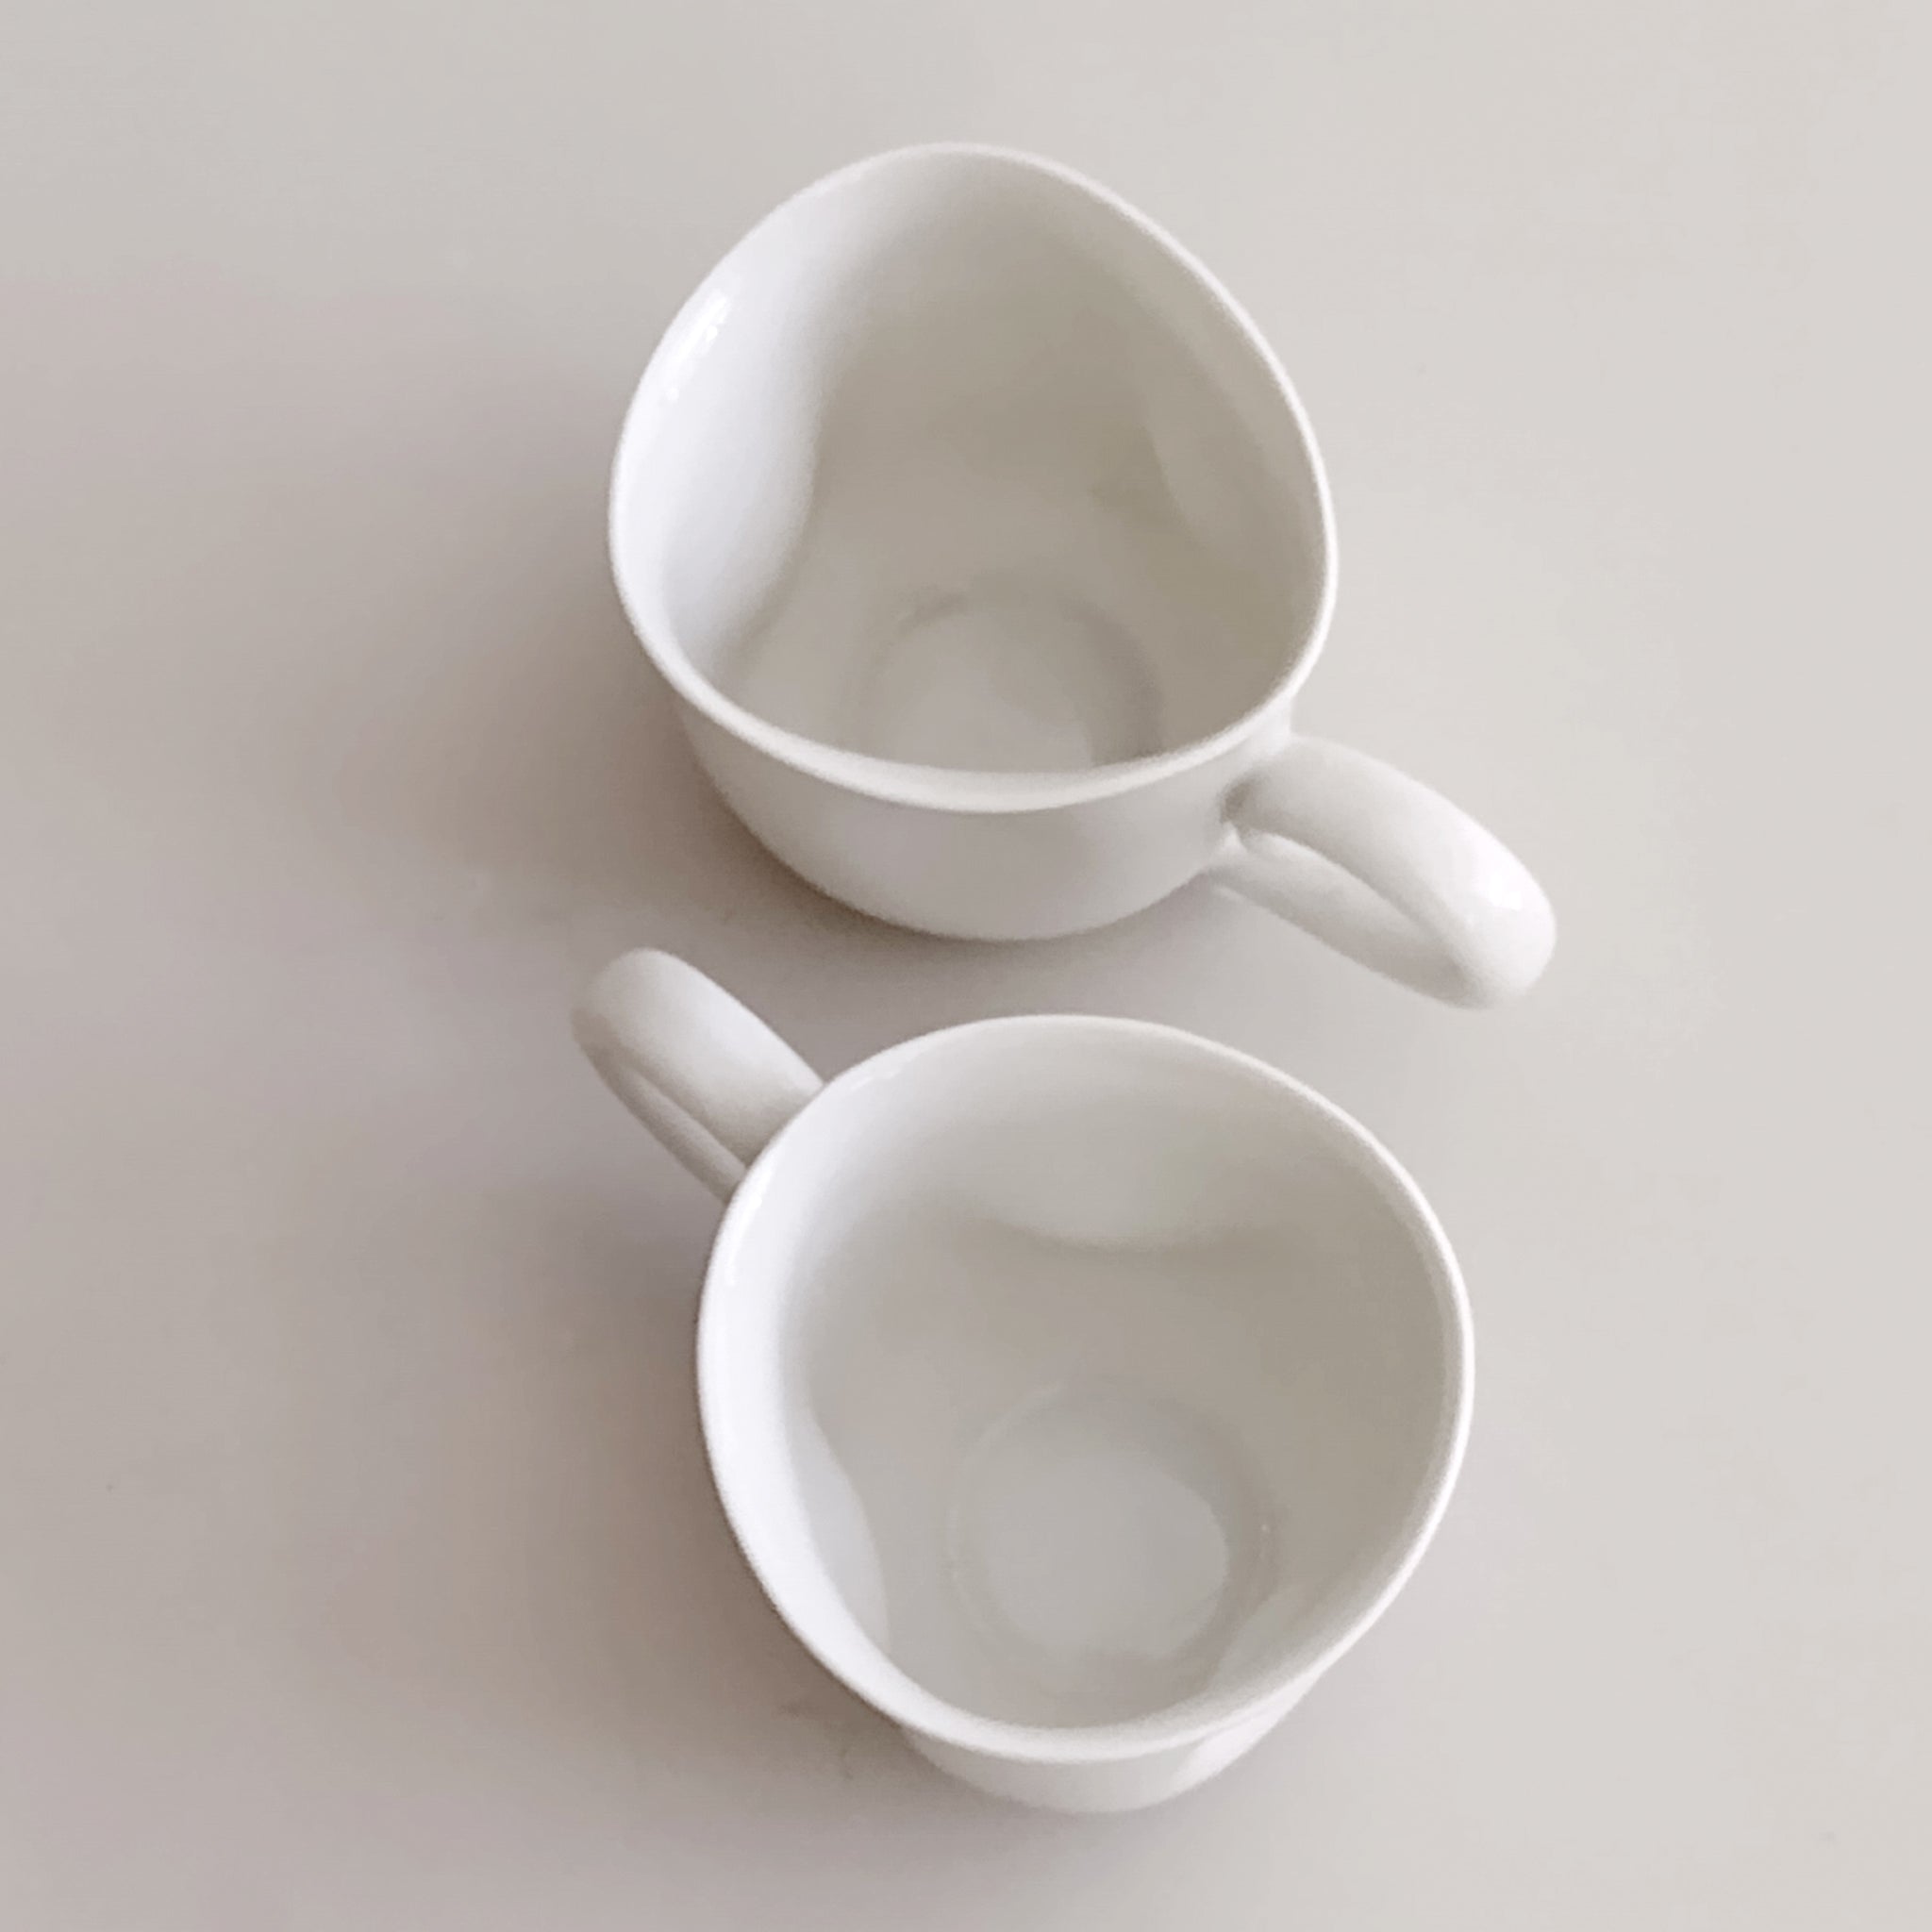 Adam & Ziege-Porseleinen espressokopjes "Knautsch" h. 6 cm, 10 cc set (2) - Schreuder-kraan.shop